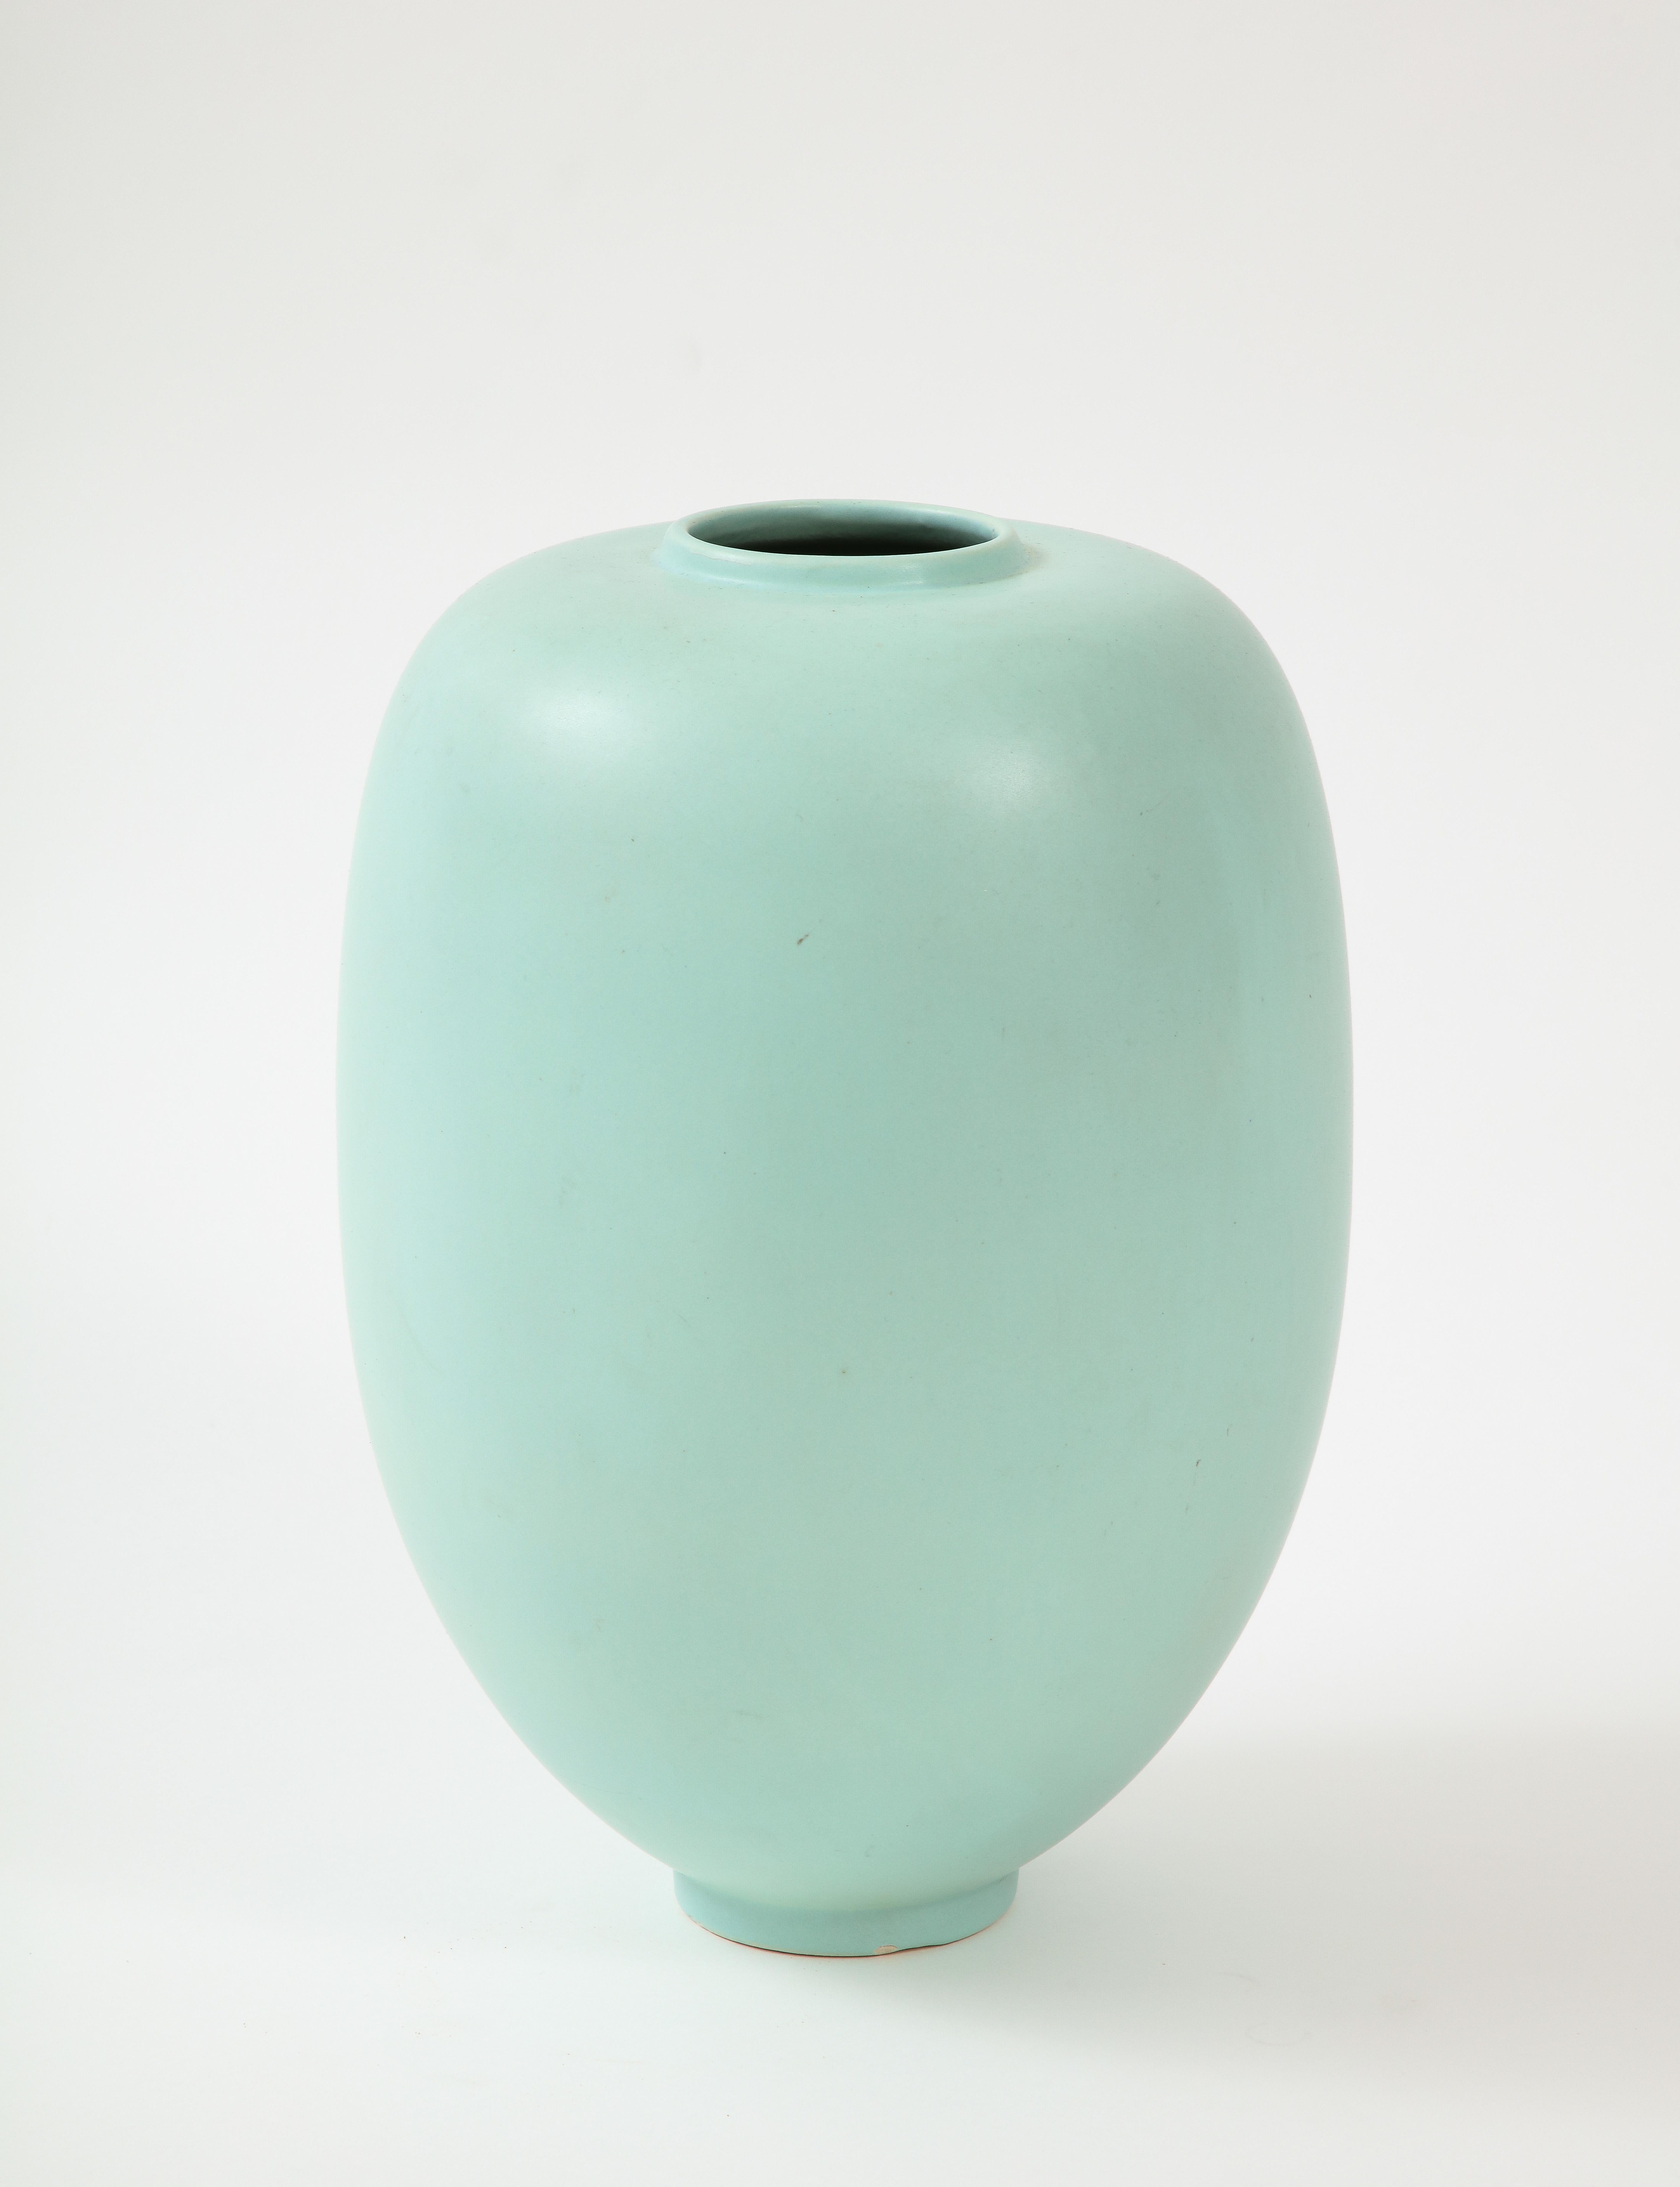 Large Celadon Saint Clément vase, France, c.1940, signed.
Ceramic porcelain.
Measures: height 14.5, diameter 9.5 in.